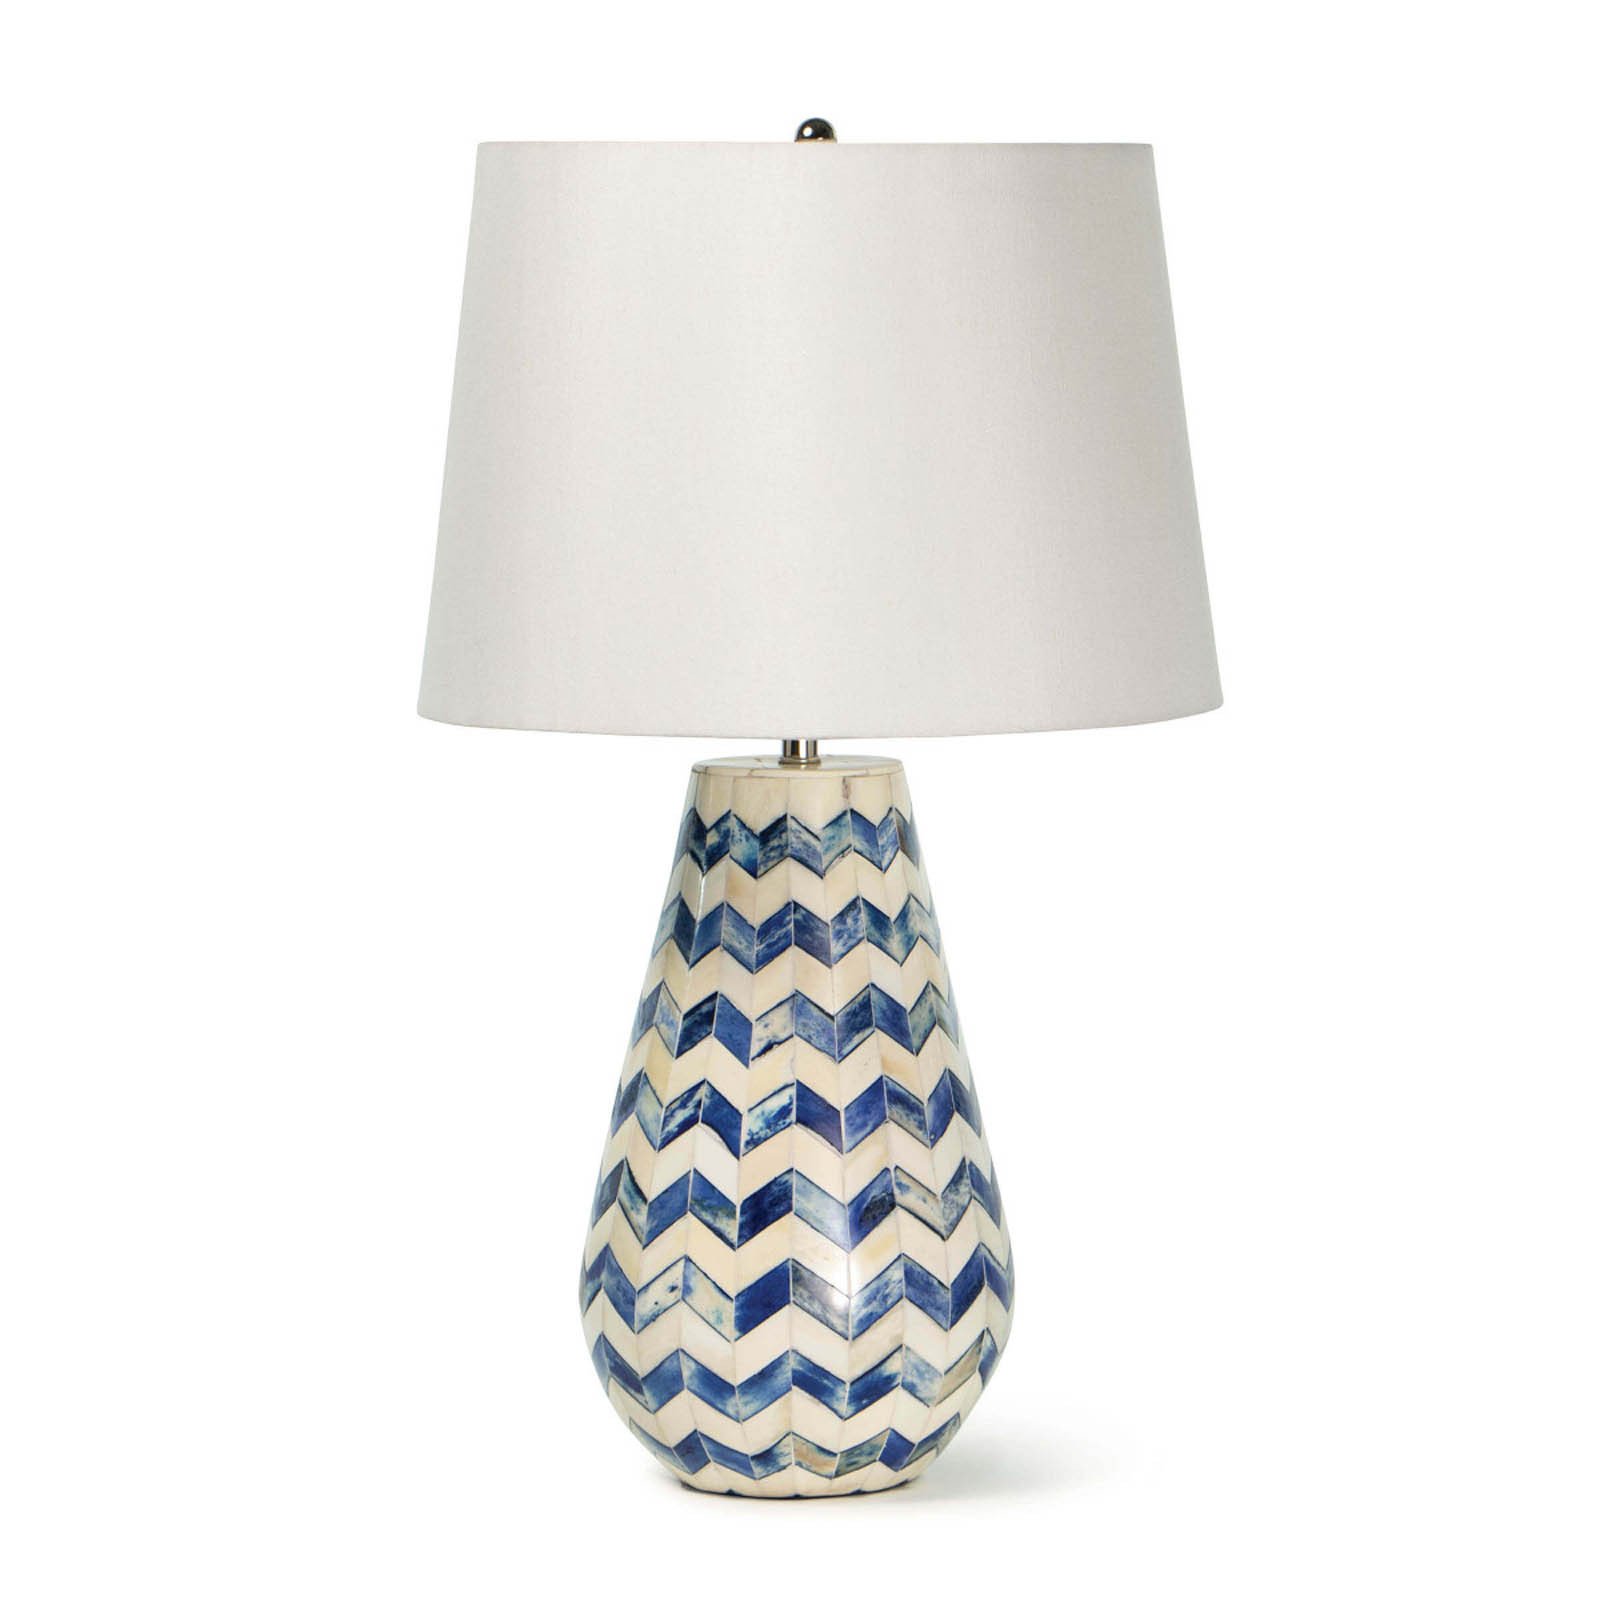 35569 - Cassia Blue Chevron Table Lamp - $540 - Purchased